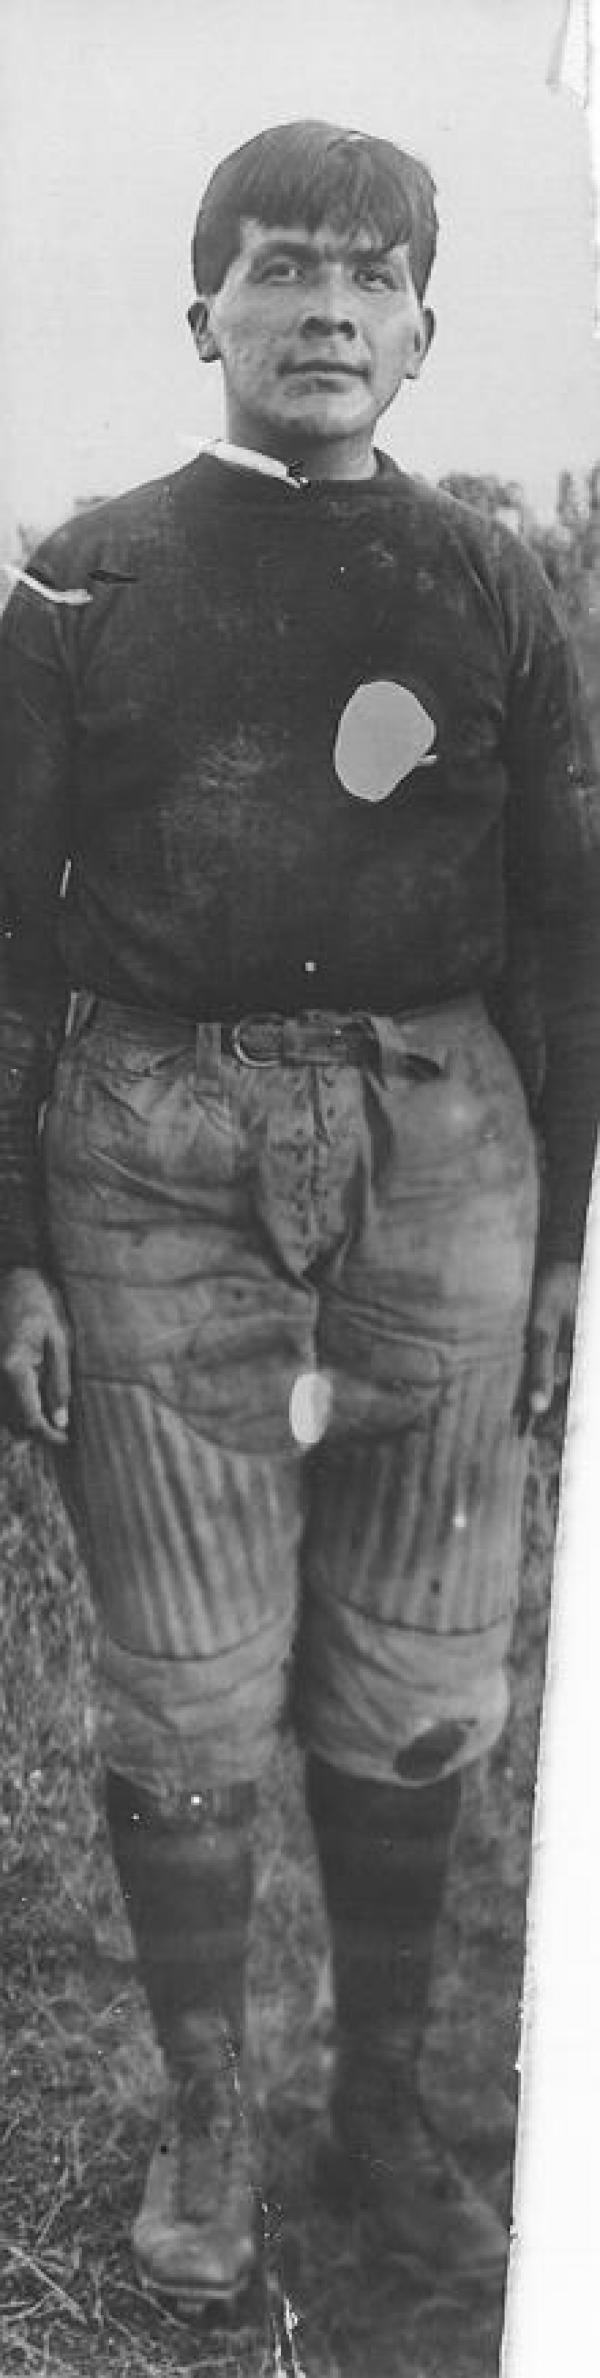 Elmer Busch in football uniform, c.1912